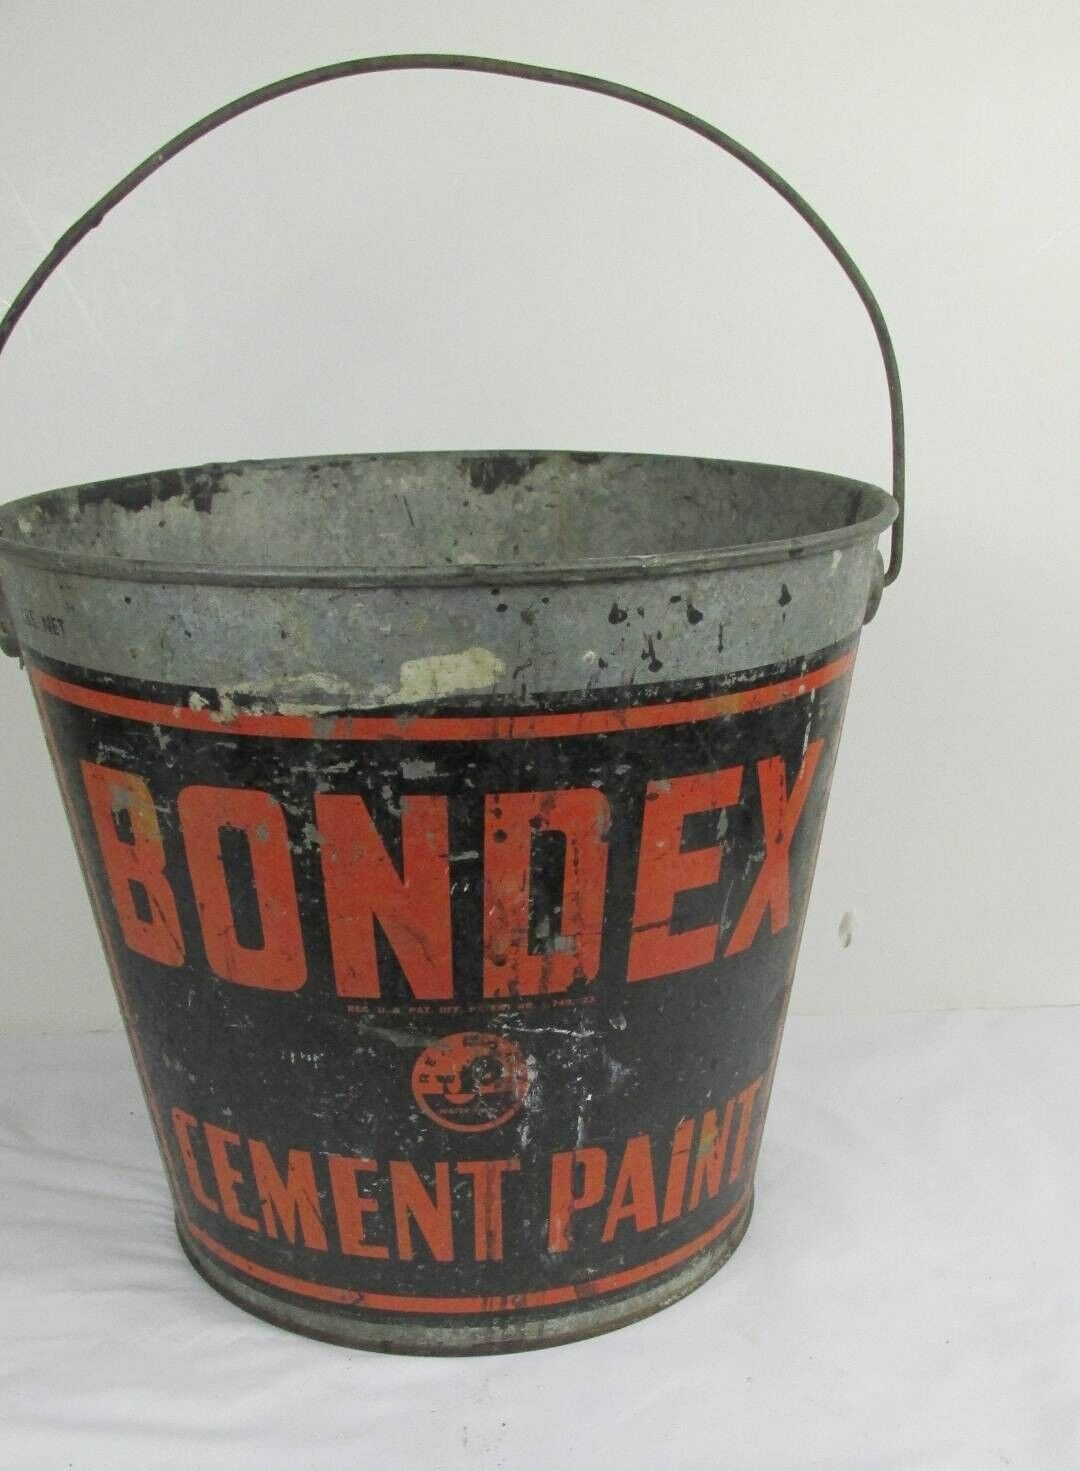 Antique Vintage Bonded Cement Paint Bucket Bondex Metal Early Advertising 27 Lb